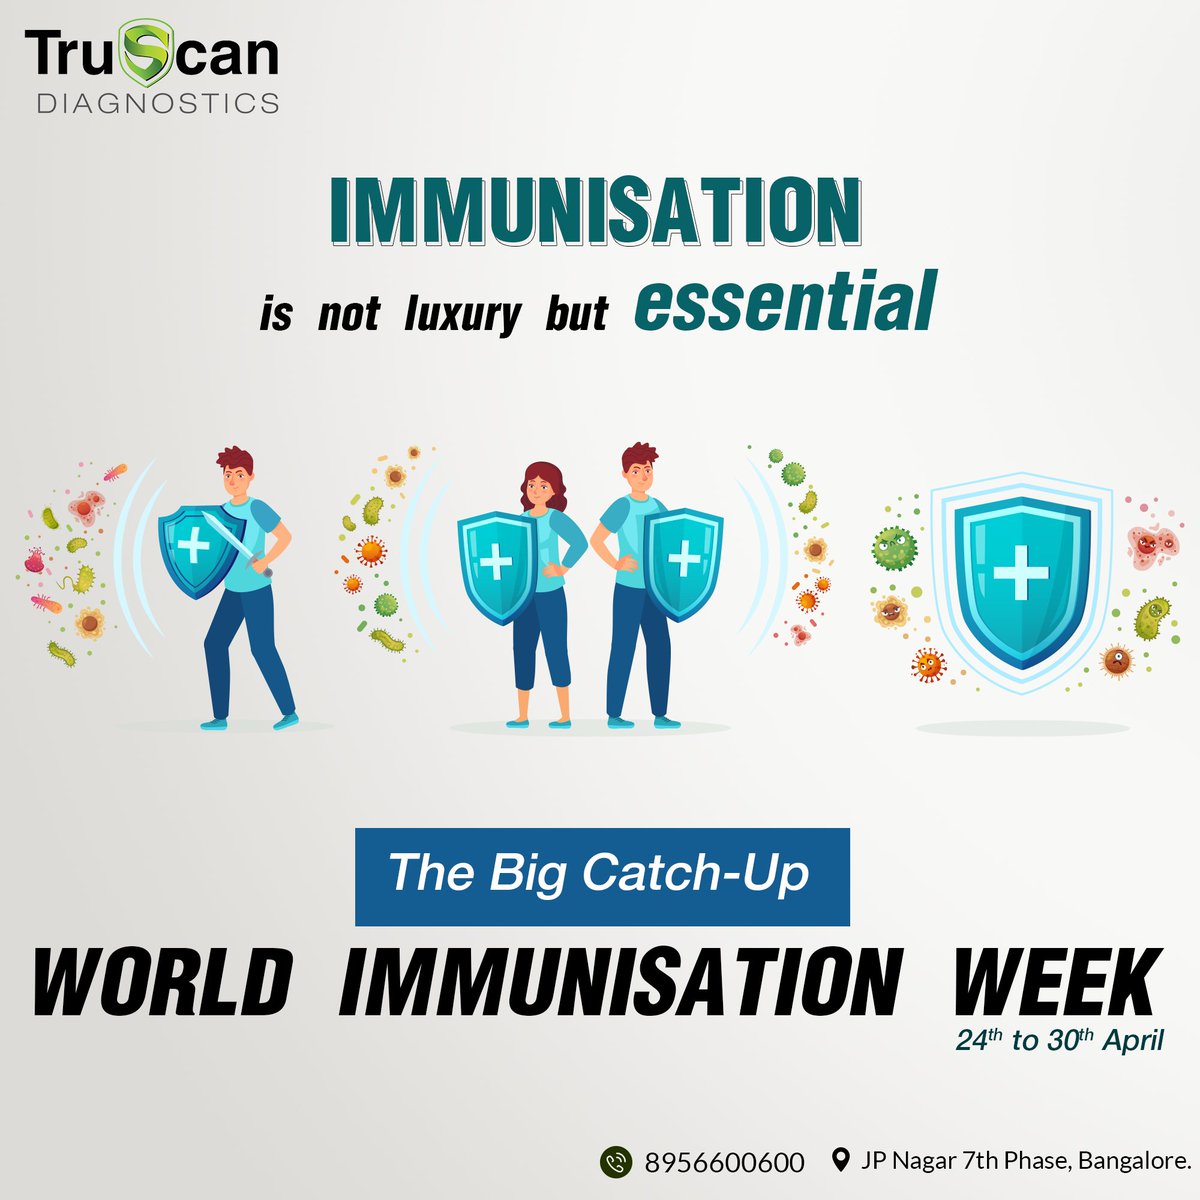 𝗪𝗼𝗿𝗹𝗱 𝗜𝗺𝗺𝘂𝗻𝗶𝘀𝗮𝘁𝗶𝗼𝗻 𝗪𝗲𝗲𝗸 𝗗𝗮𝘆
.
.
𝗙𝗼𝗿 𝗮𝗻𝘆 𝗾𝘂𝗲𝗿𝗶𝗲𝘀: 9606063461
𝗠𝗼𝗿𝗲 𝗶𝗻𝗳𝗼: bit.ly/truscan

#WorldImmunizationWeek #BigCatchUp #EssentialHealthcare #ImmunizationMatters  #diagnostis #diagnostiscenter #JPNagar #bangalore #Bengaluru